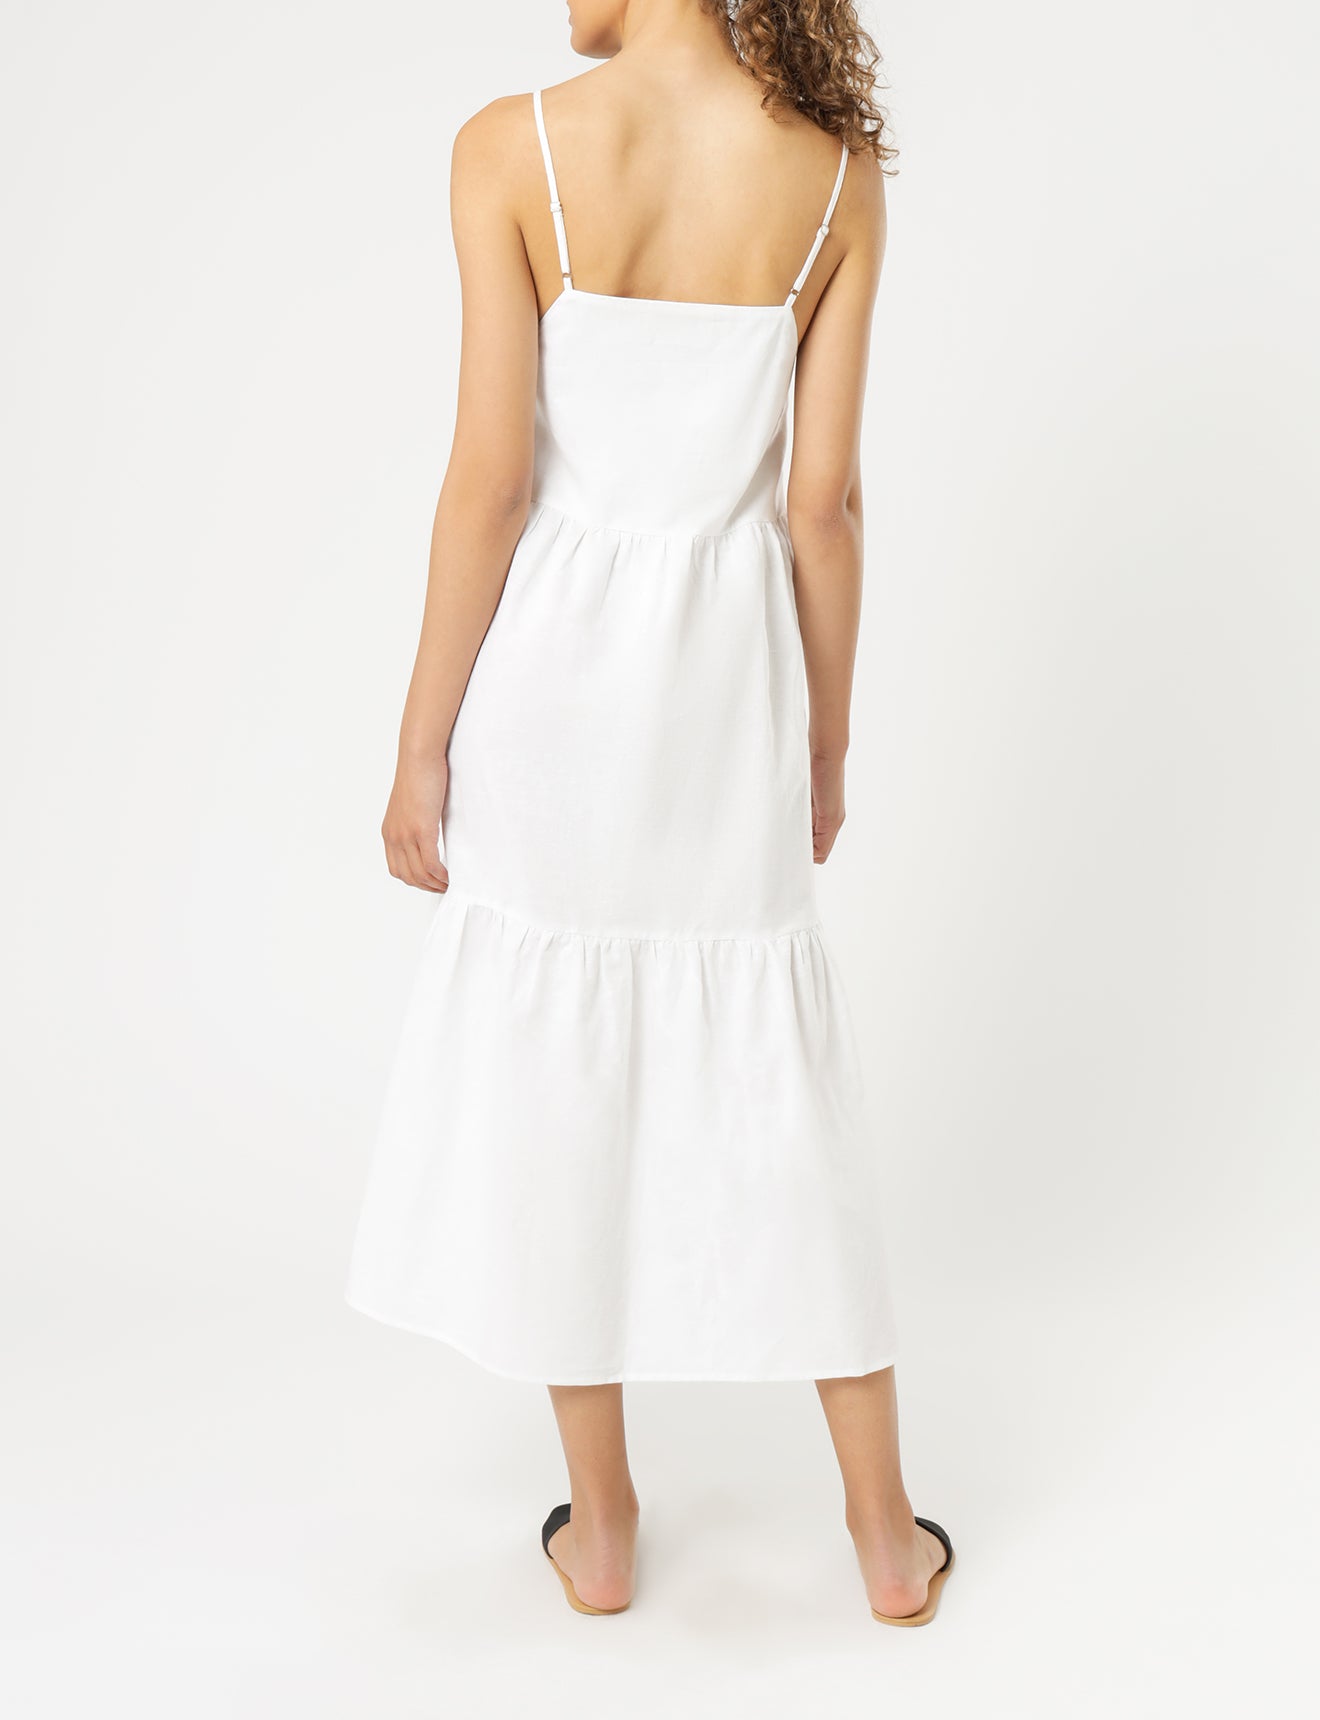 Nude Lucy miles linen midi dress white dress